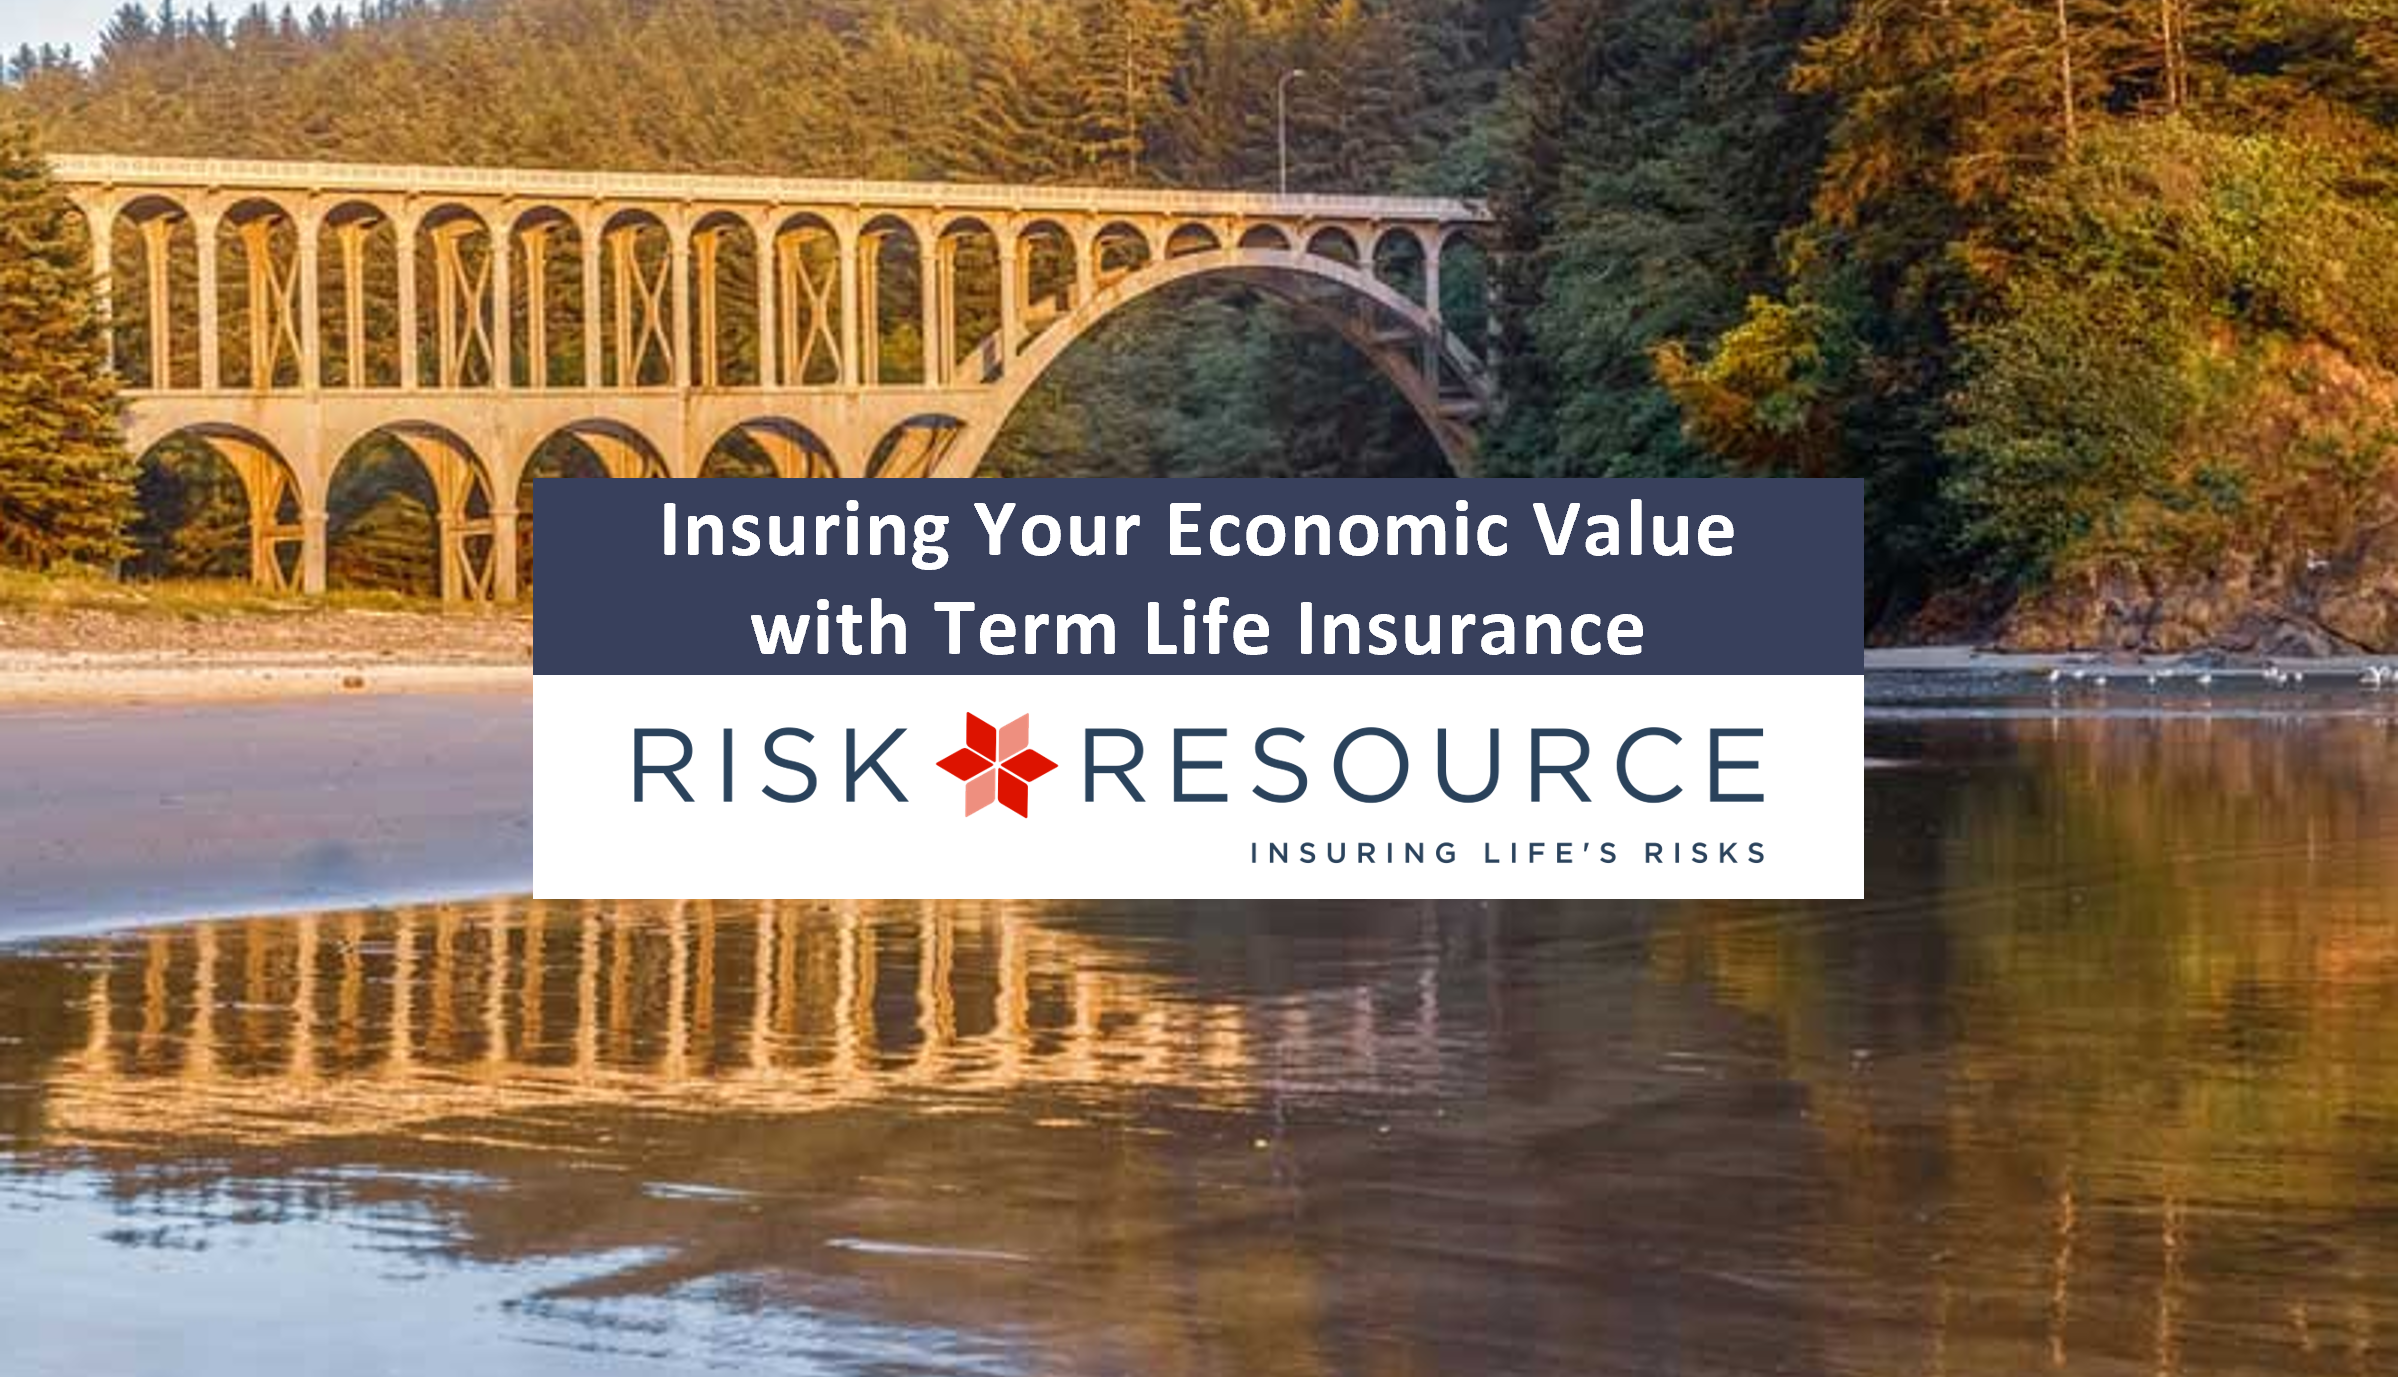 Bridge, Risk Resource title